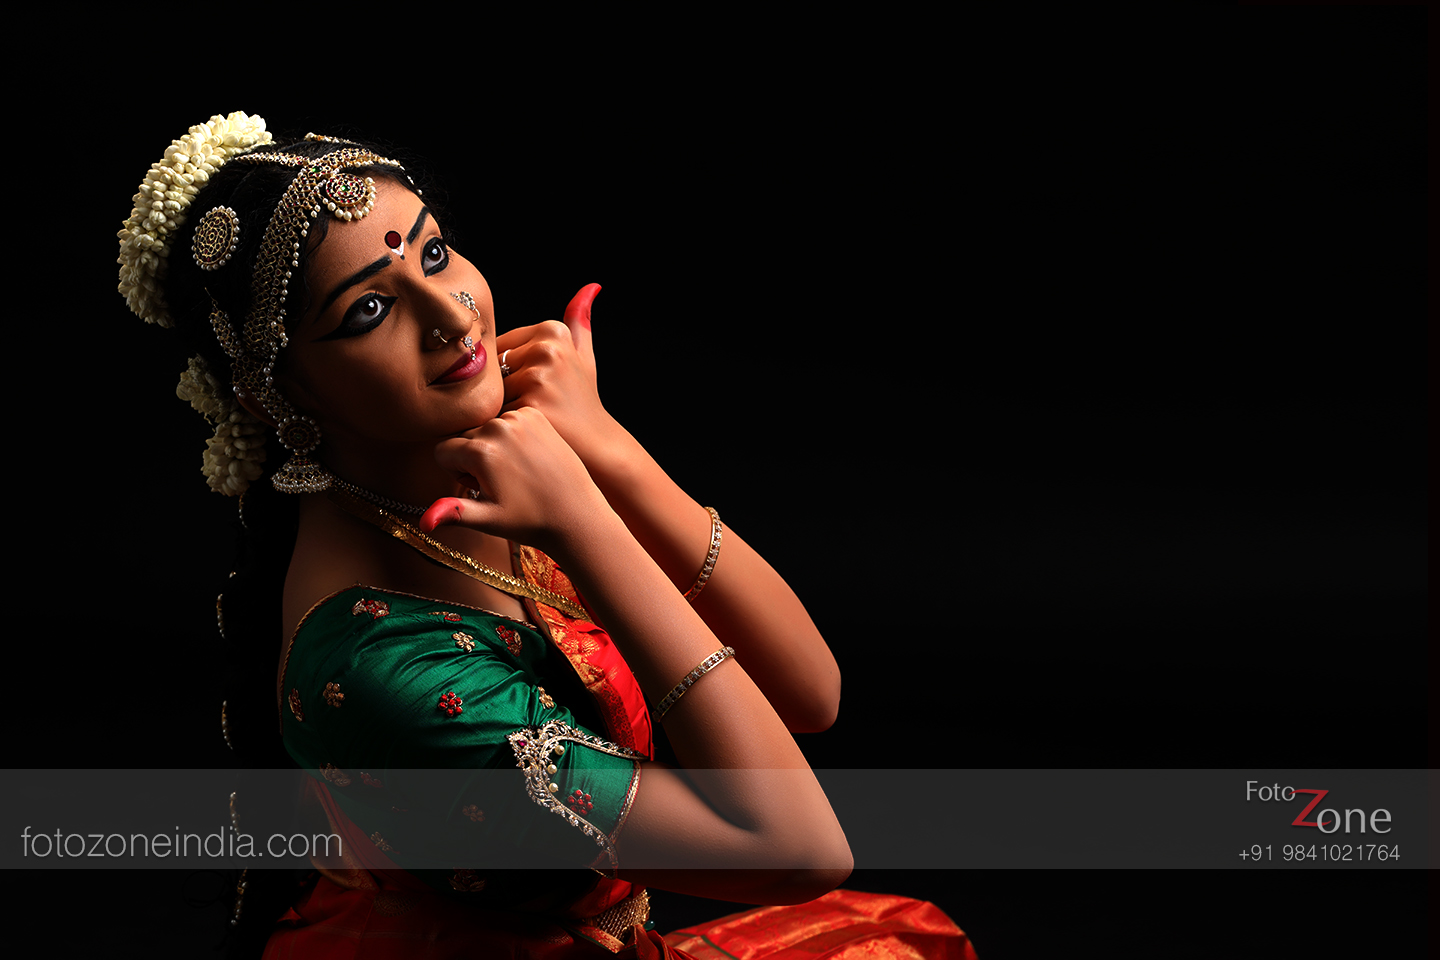 File:Gayathri Subramanian Dance Pose.jpg - Wikipedia